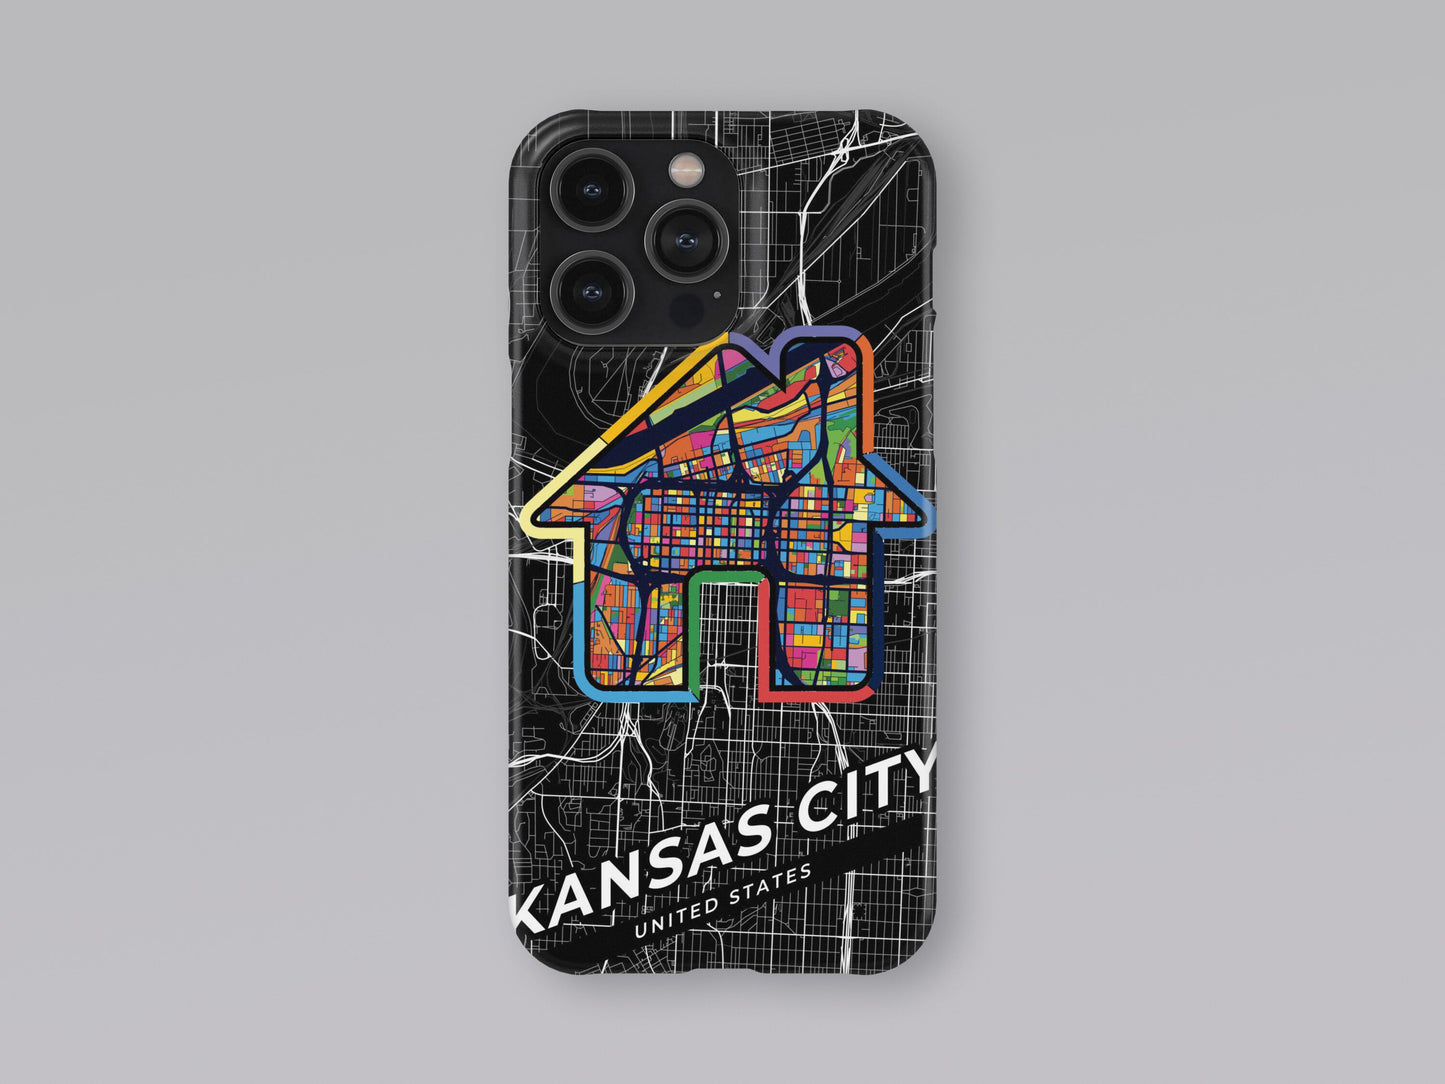 Kansas City Missouri slim phone case with colorful icon. Birthday, wedding or housewarming gift. Couple match cases. 3